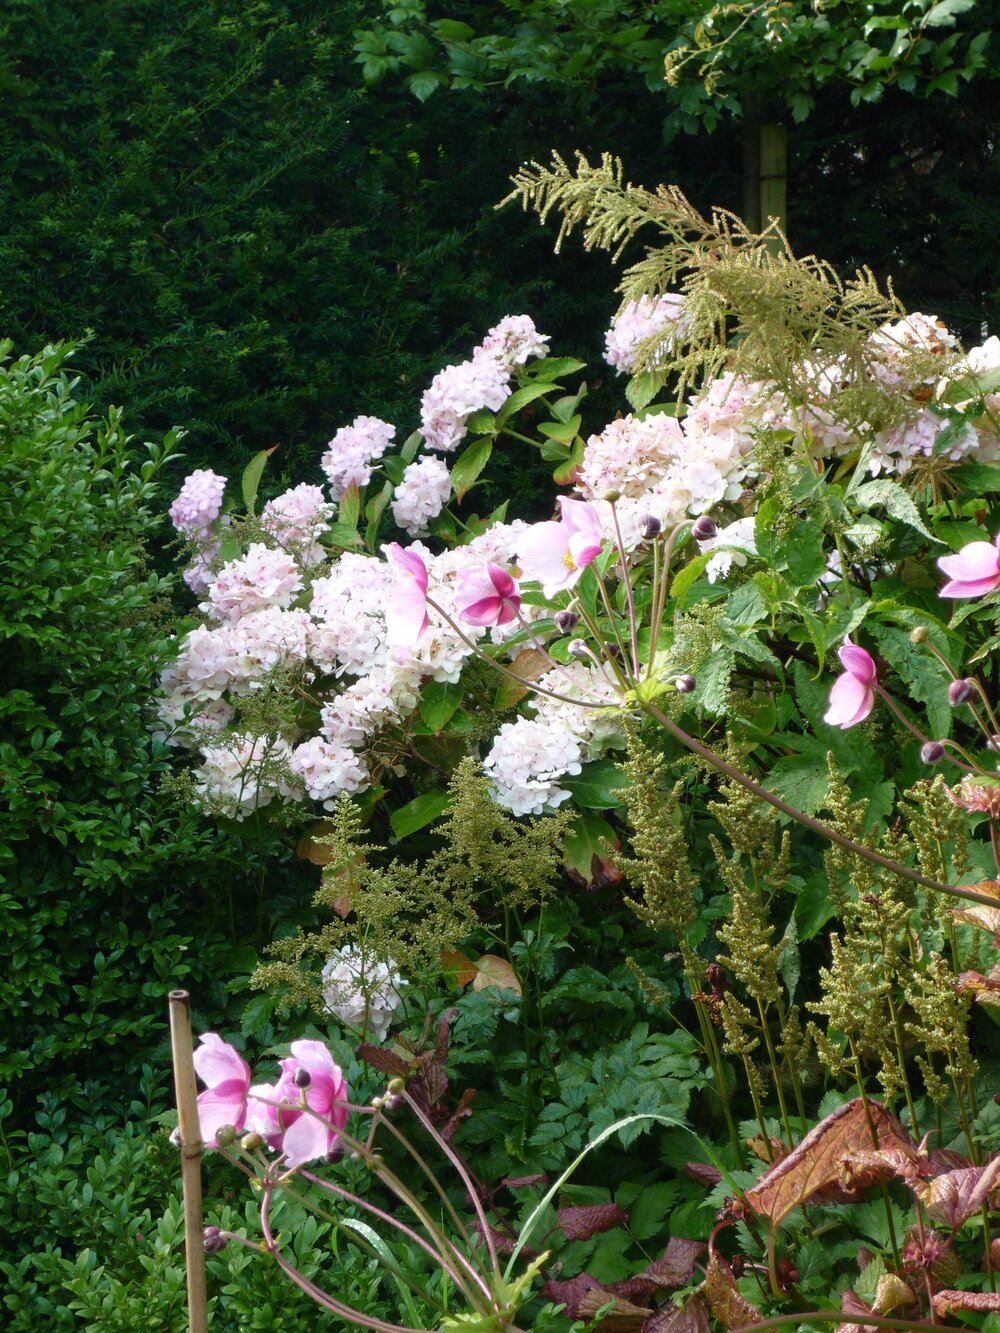 Hydrangea arborescens ‘Annabelle’